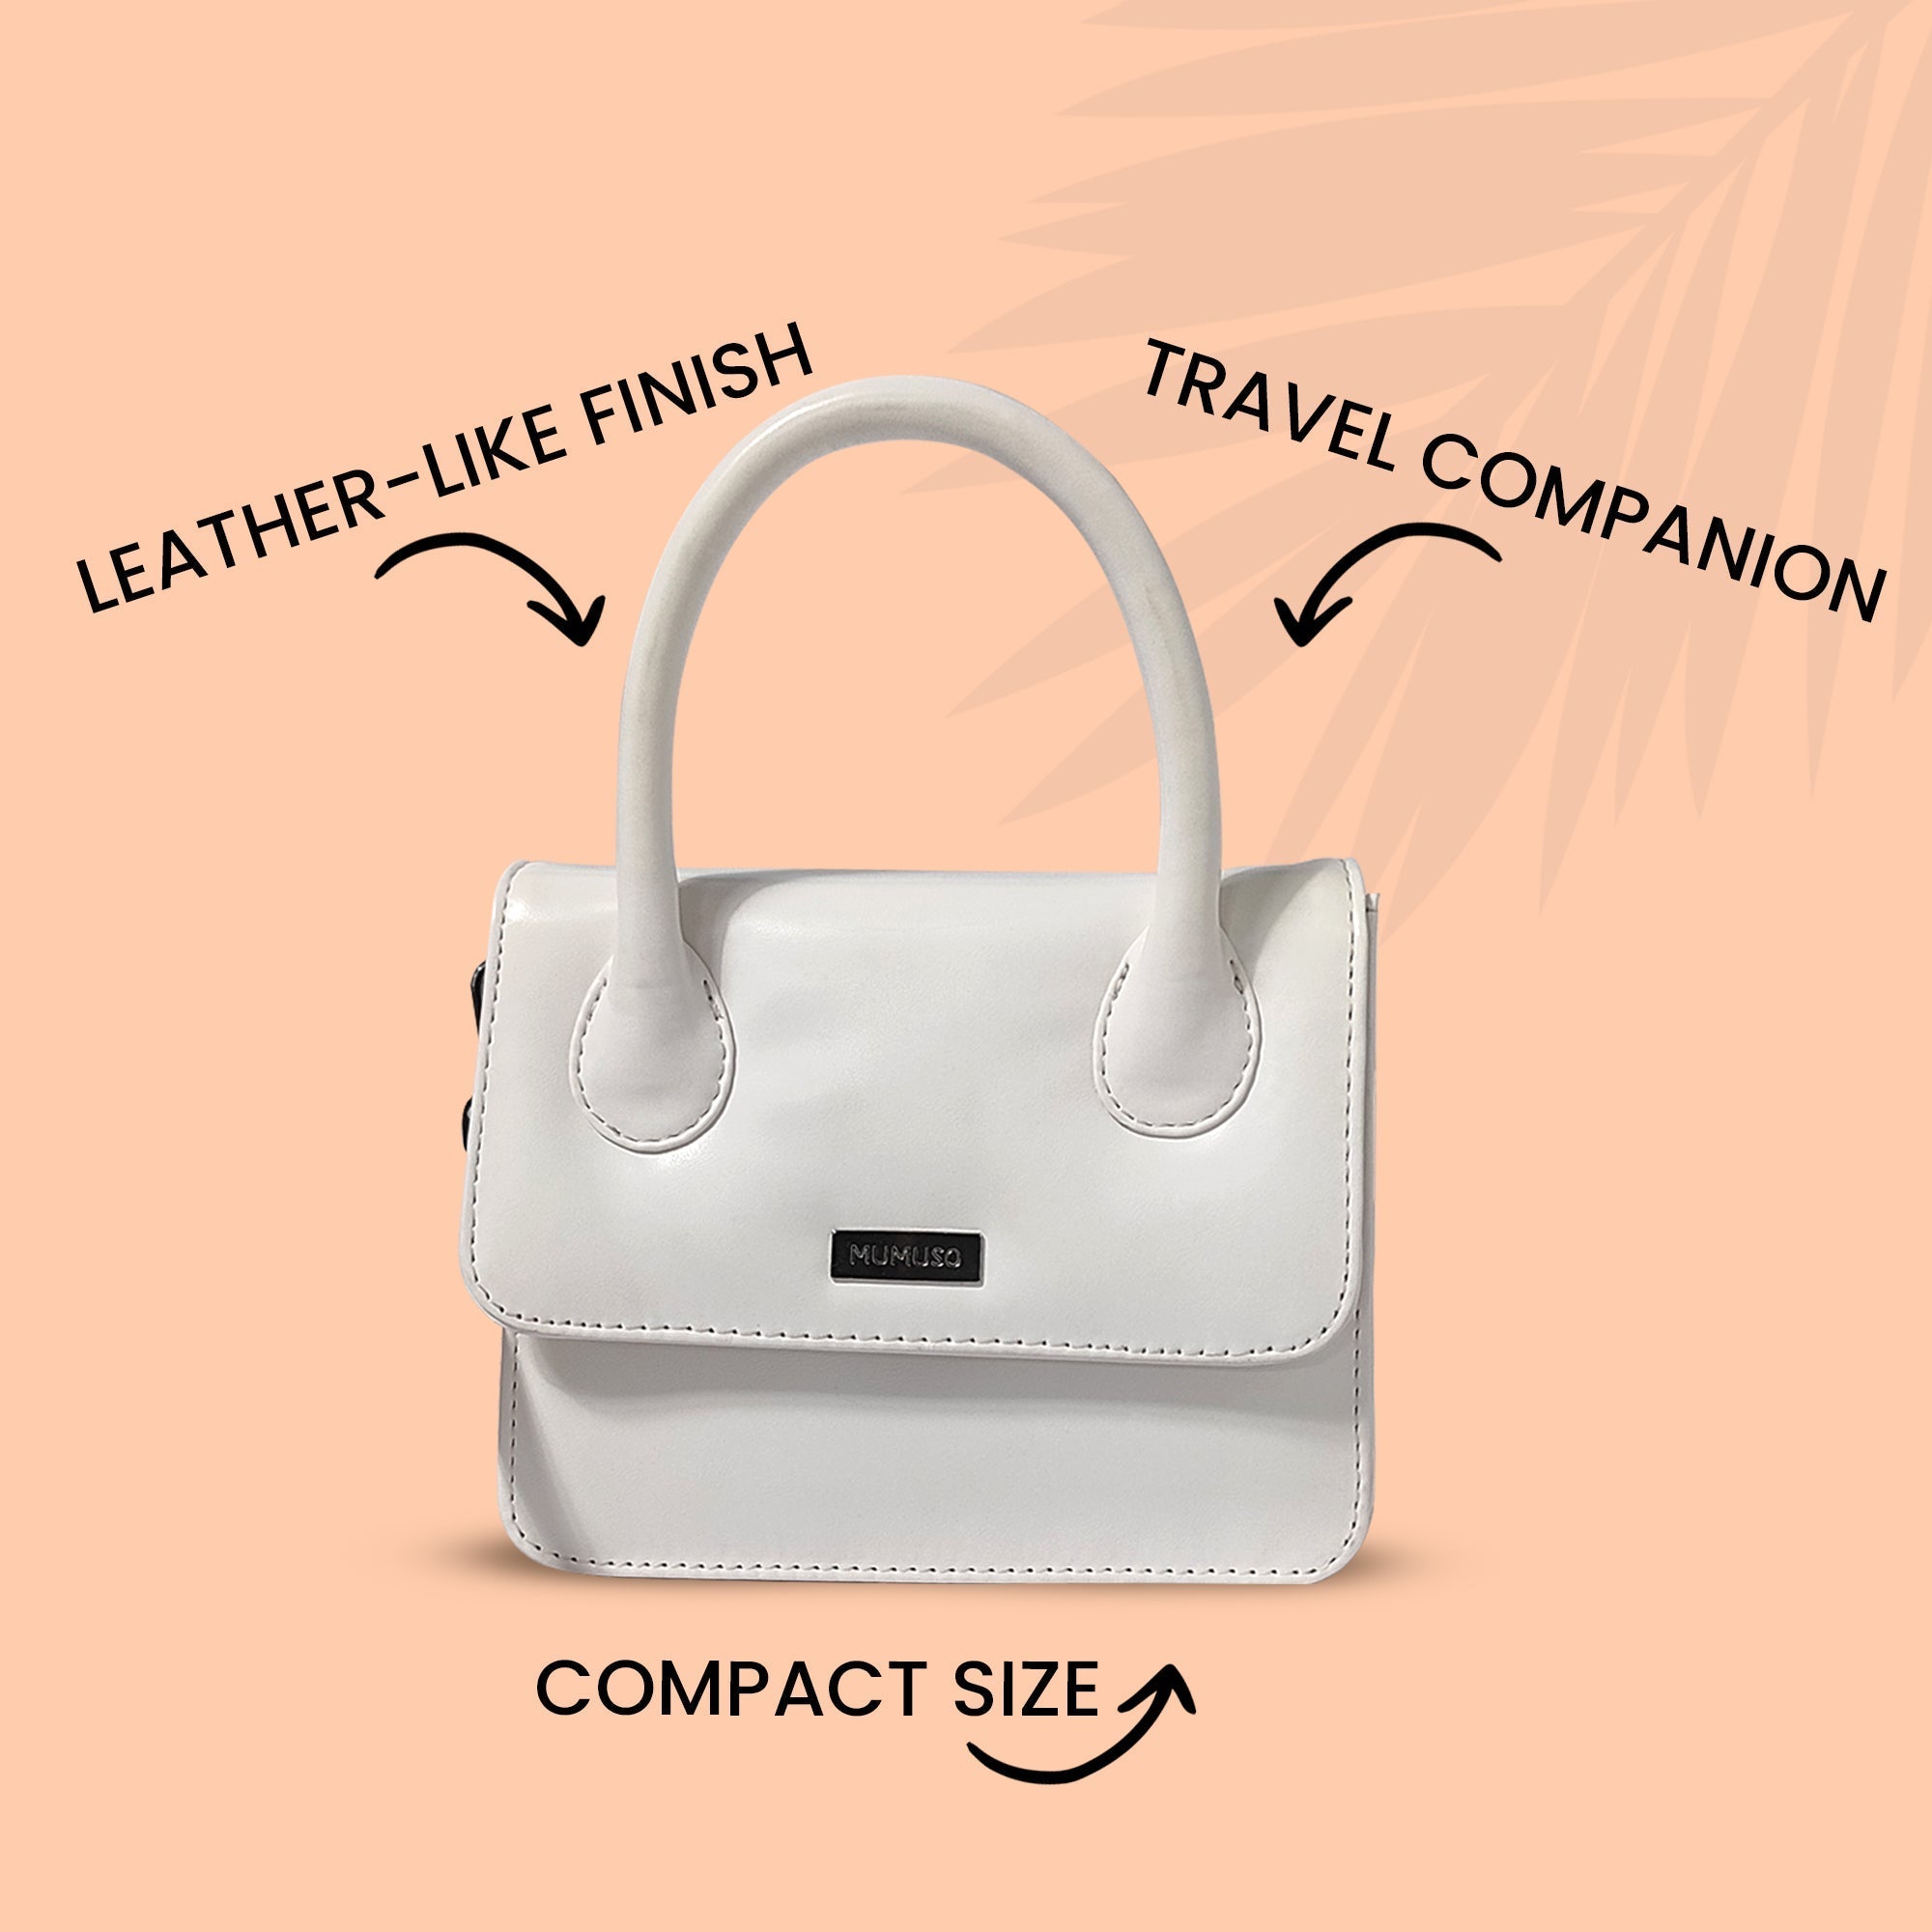 Buy Mumuso Tote Shoulder Bag |Bag for Grocery| Shopping| Travel | Beach  |Shopping Bags |Travel Bag| for Women Girls Ladies -(Grey) at Amazon.in